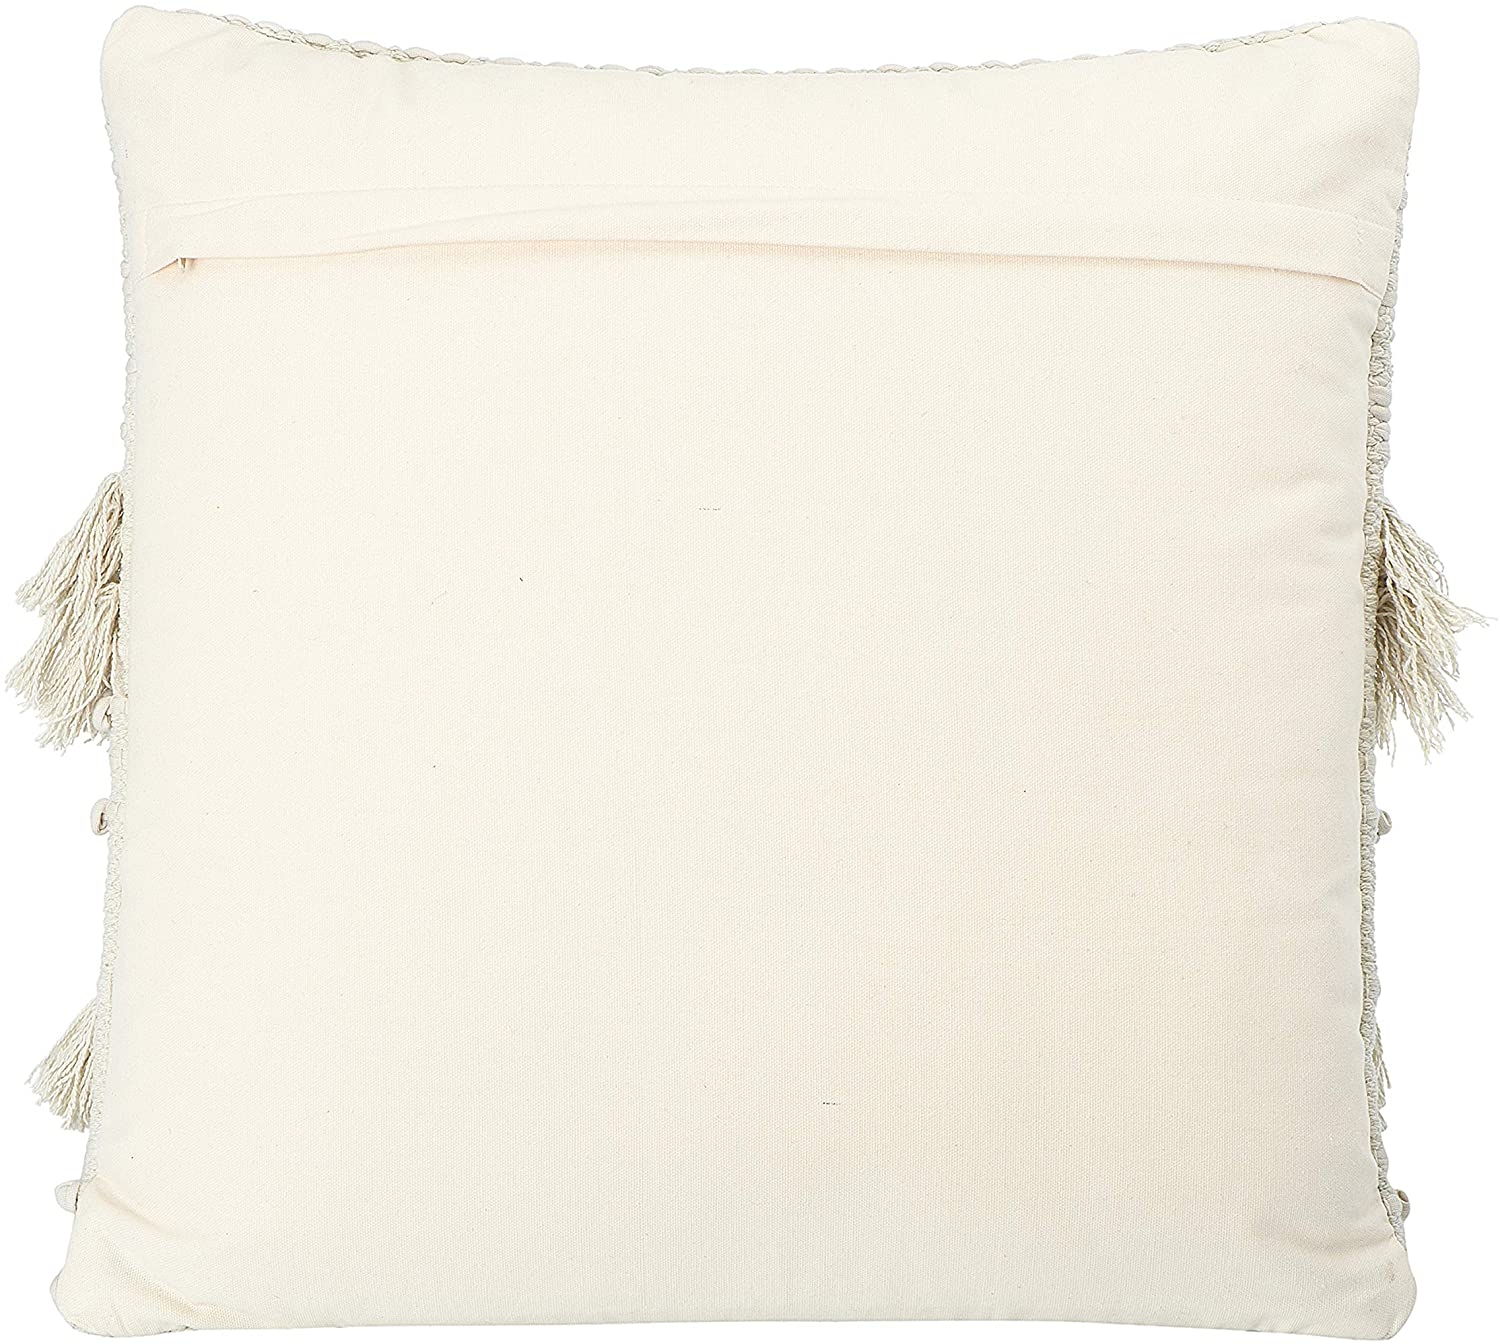 Textured Fringe Throw Pillow, Cream, 20" x 20" - Image 4